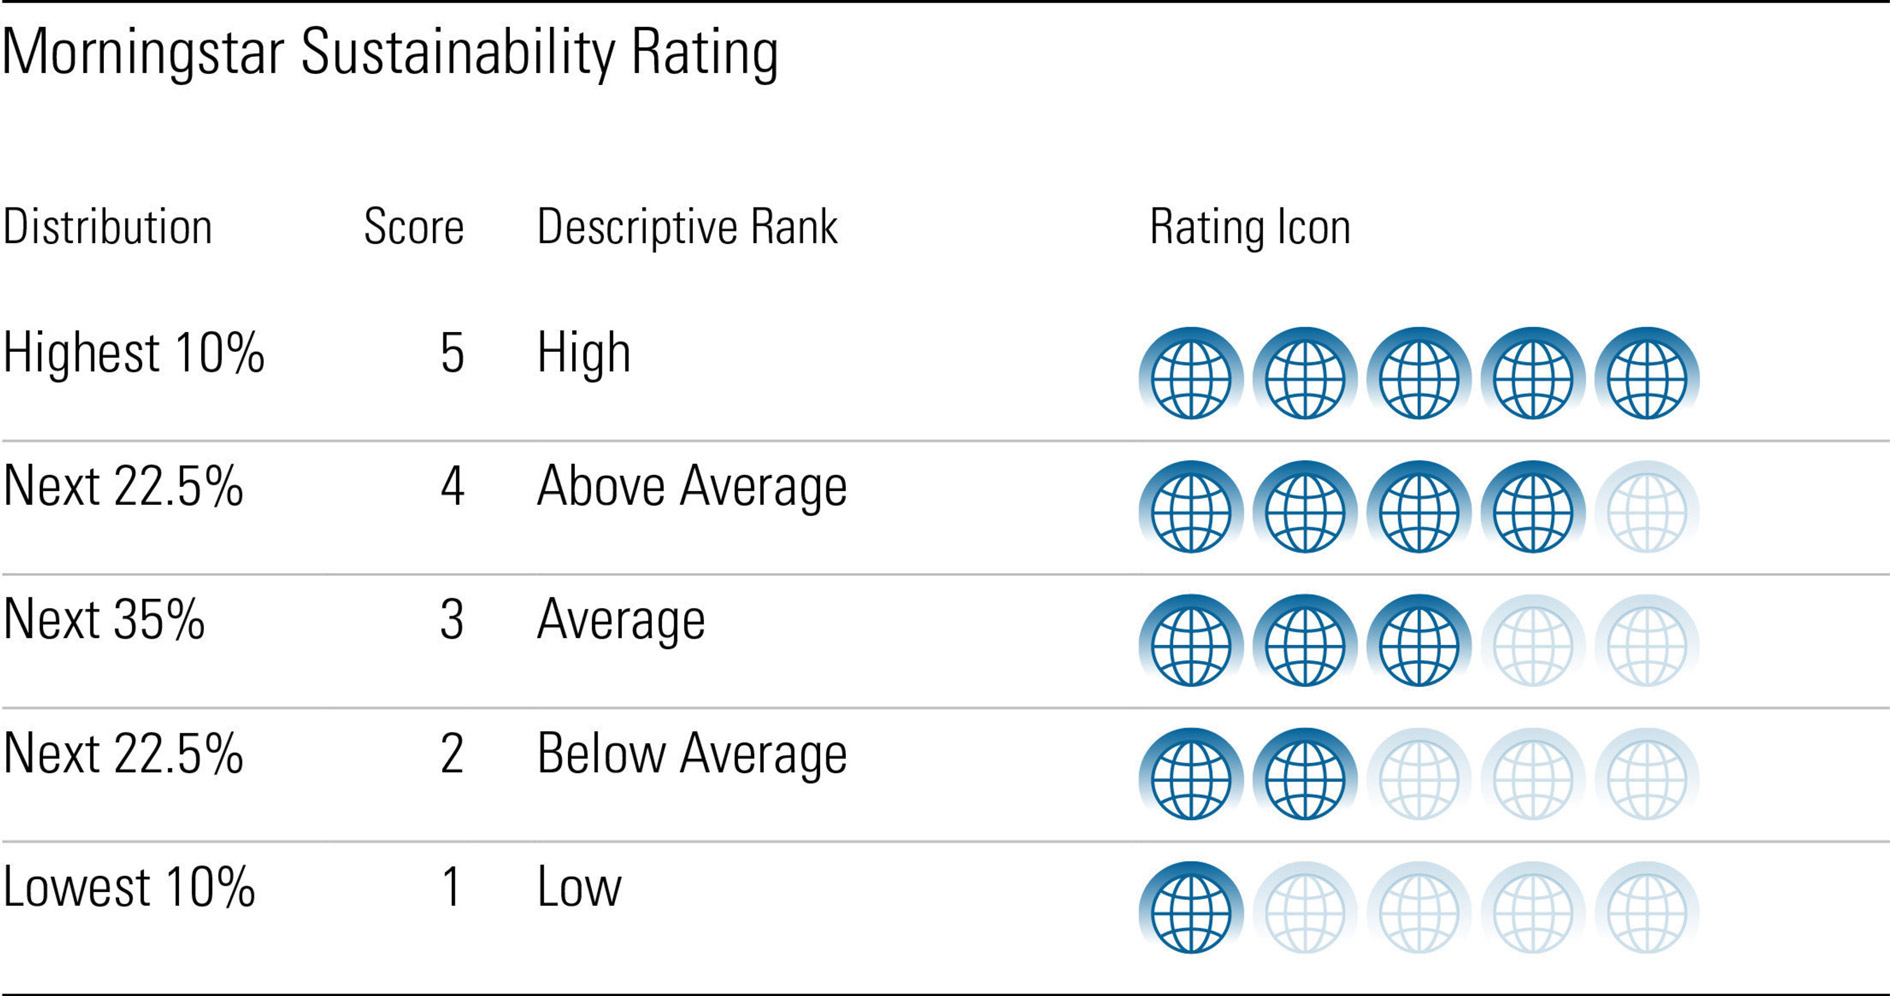 Morningstar sustinability rating